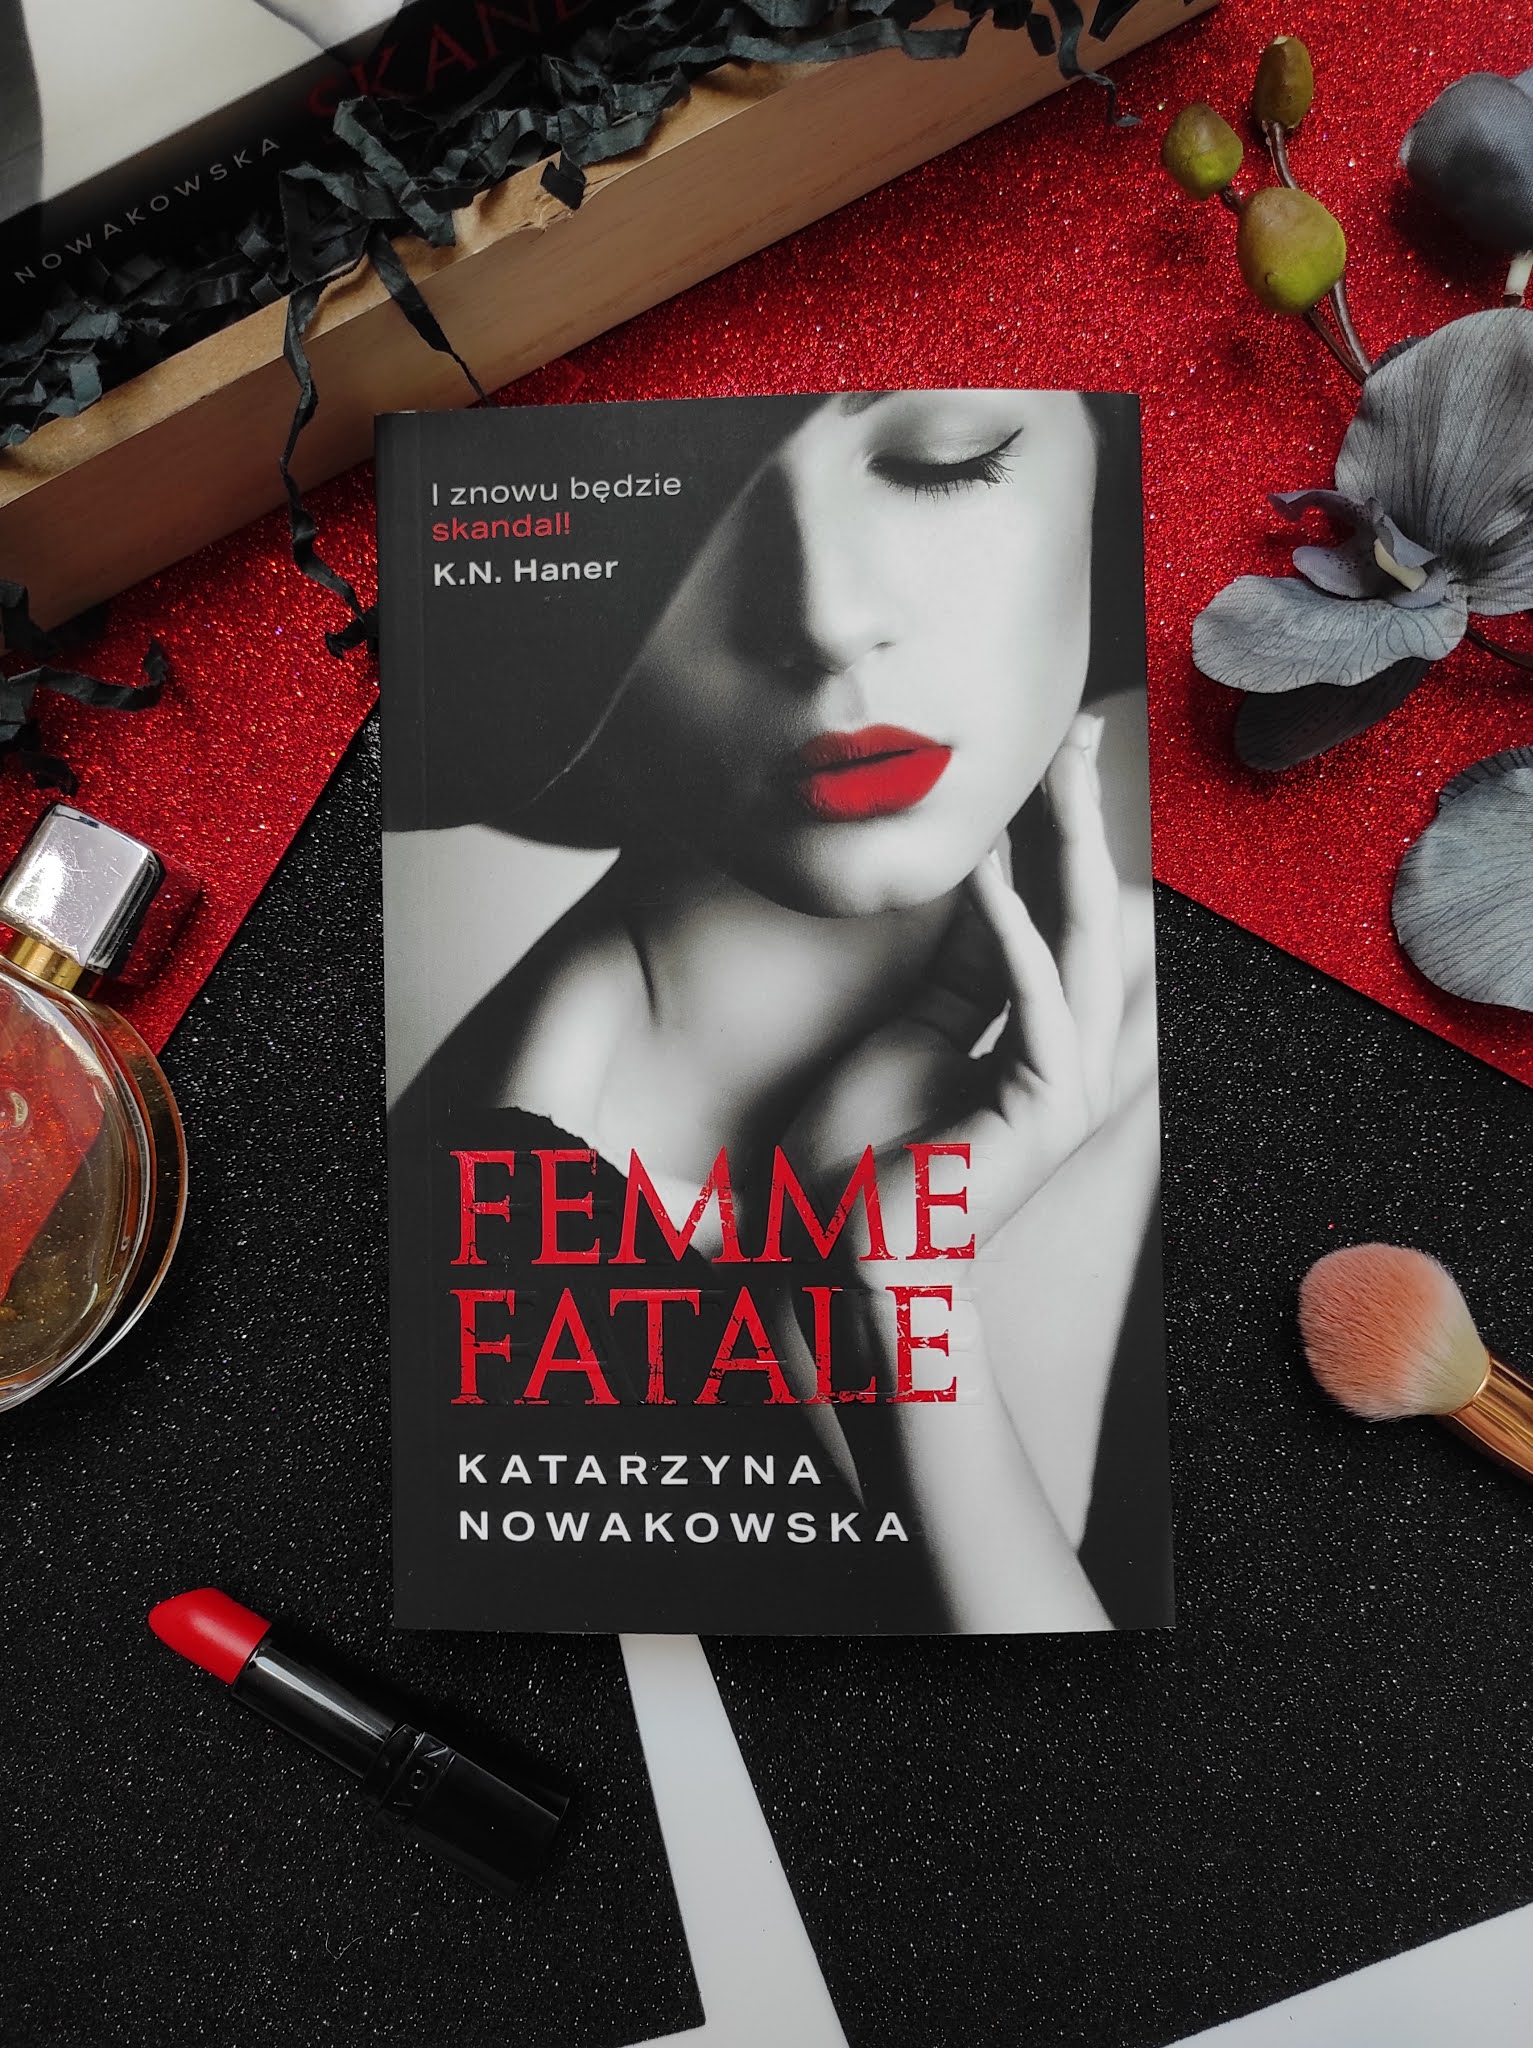 "Femme Fatale" Katarzyna Nowakowska